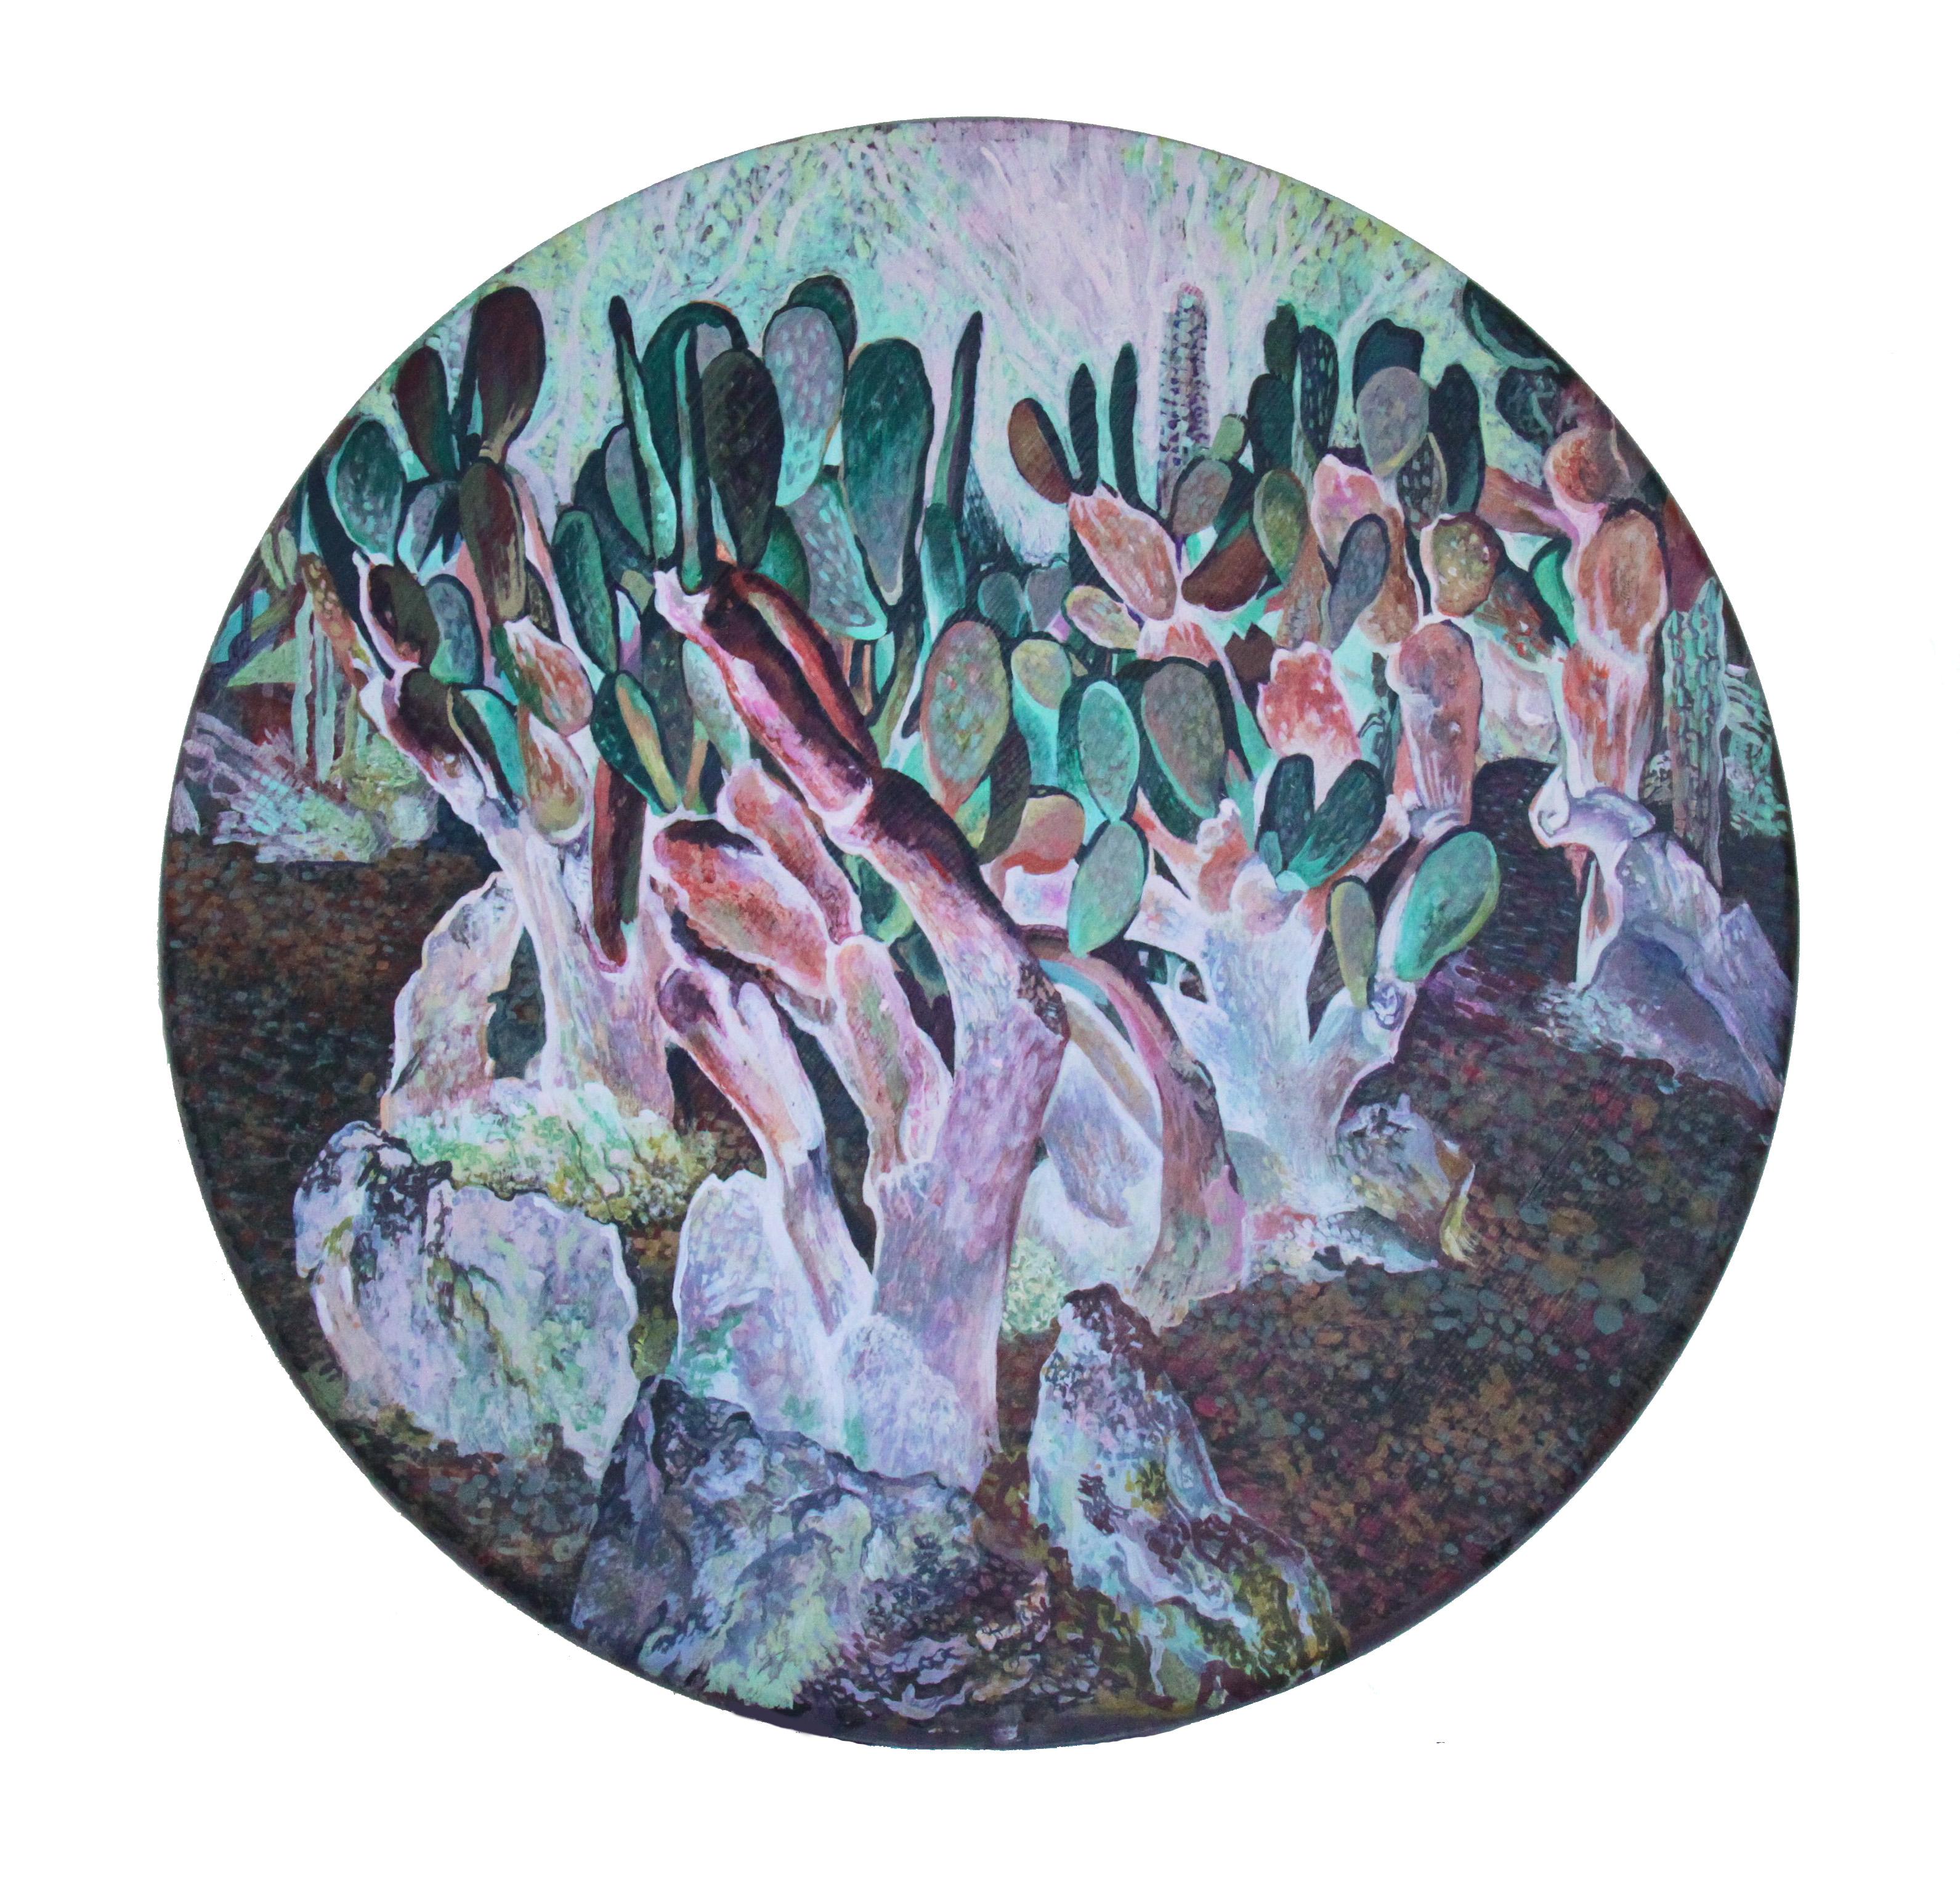 Nikolina Kovalenko Figurative Painting – Noon (Kactus) – runde Holzplatte in Lavander-, Violett-, Grün- und Rosafarbe